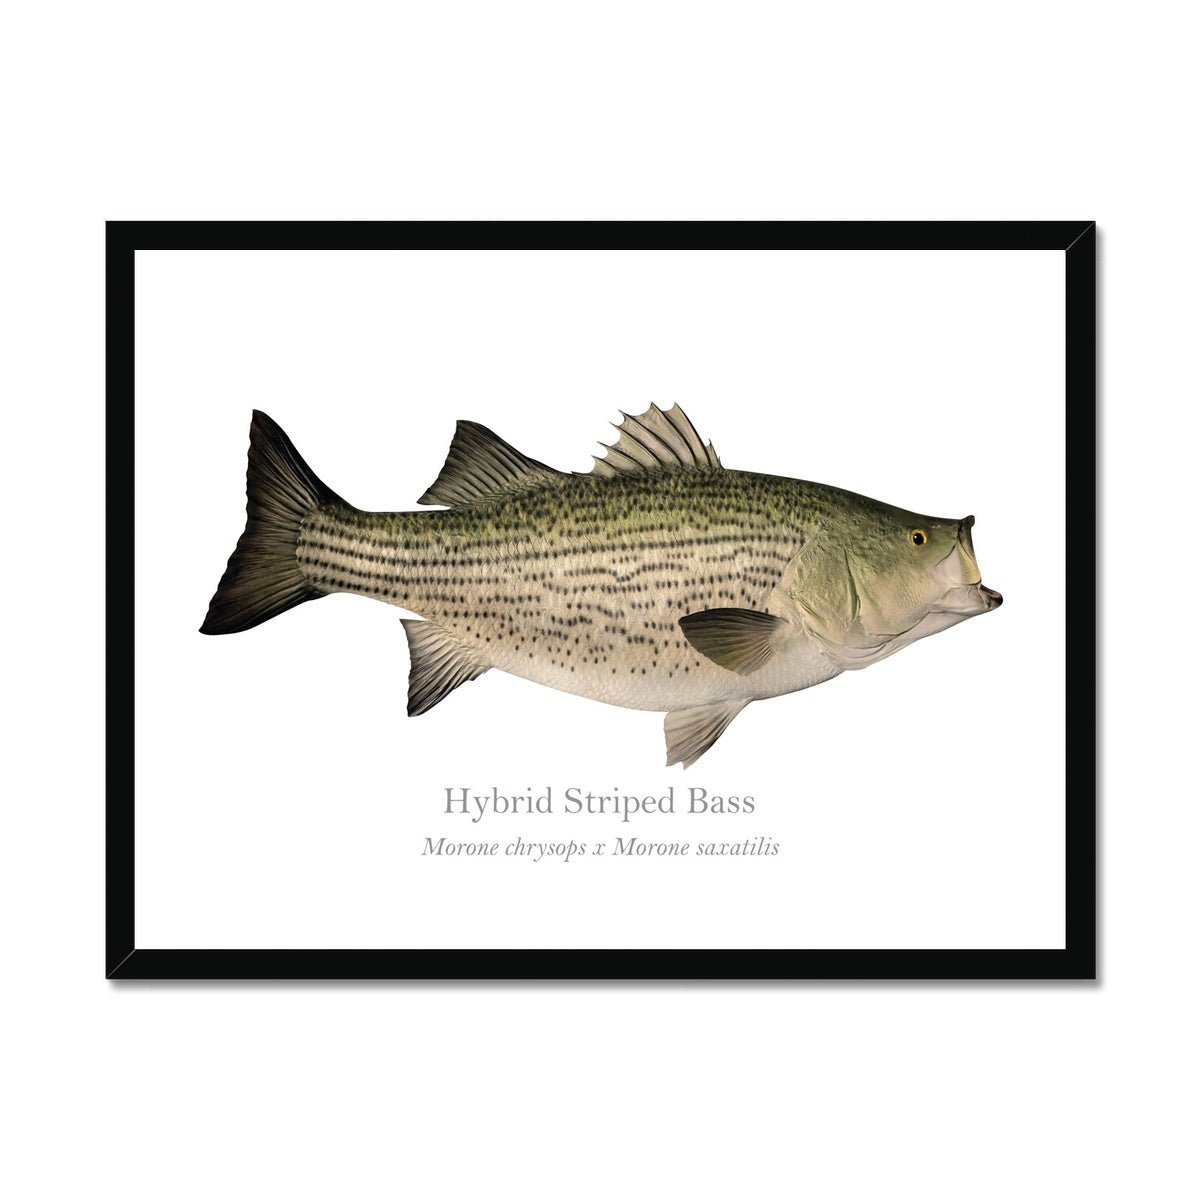 Hybrid Striped Bass - Framed Print - With Scientific Name - madfishlab.com